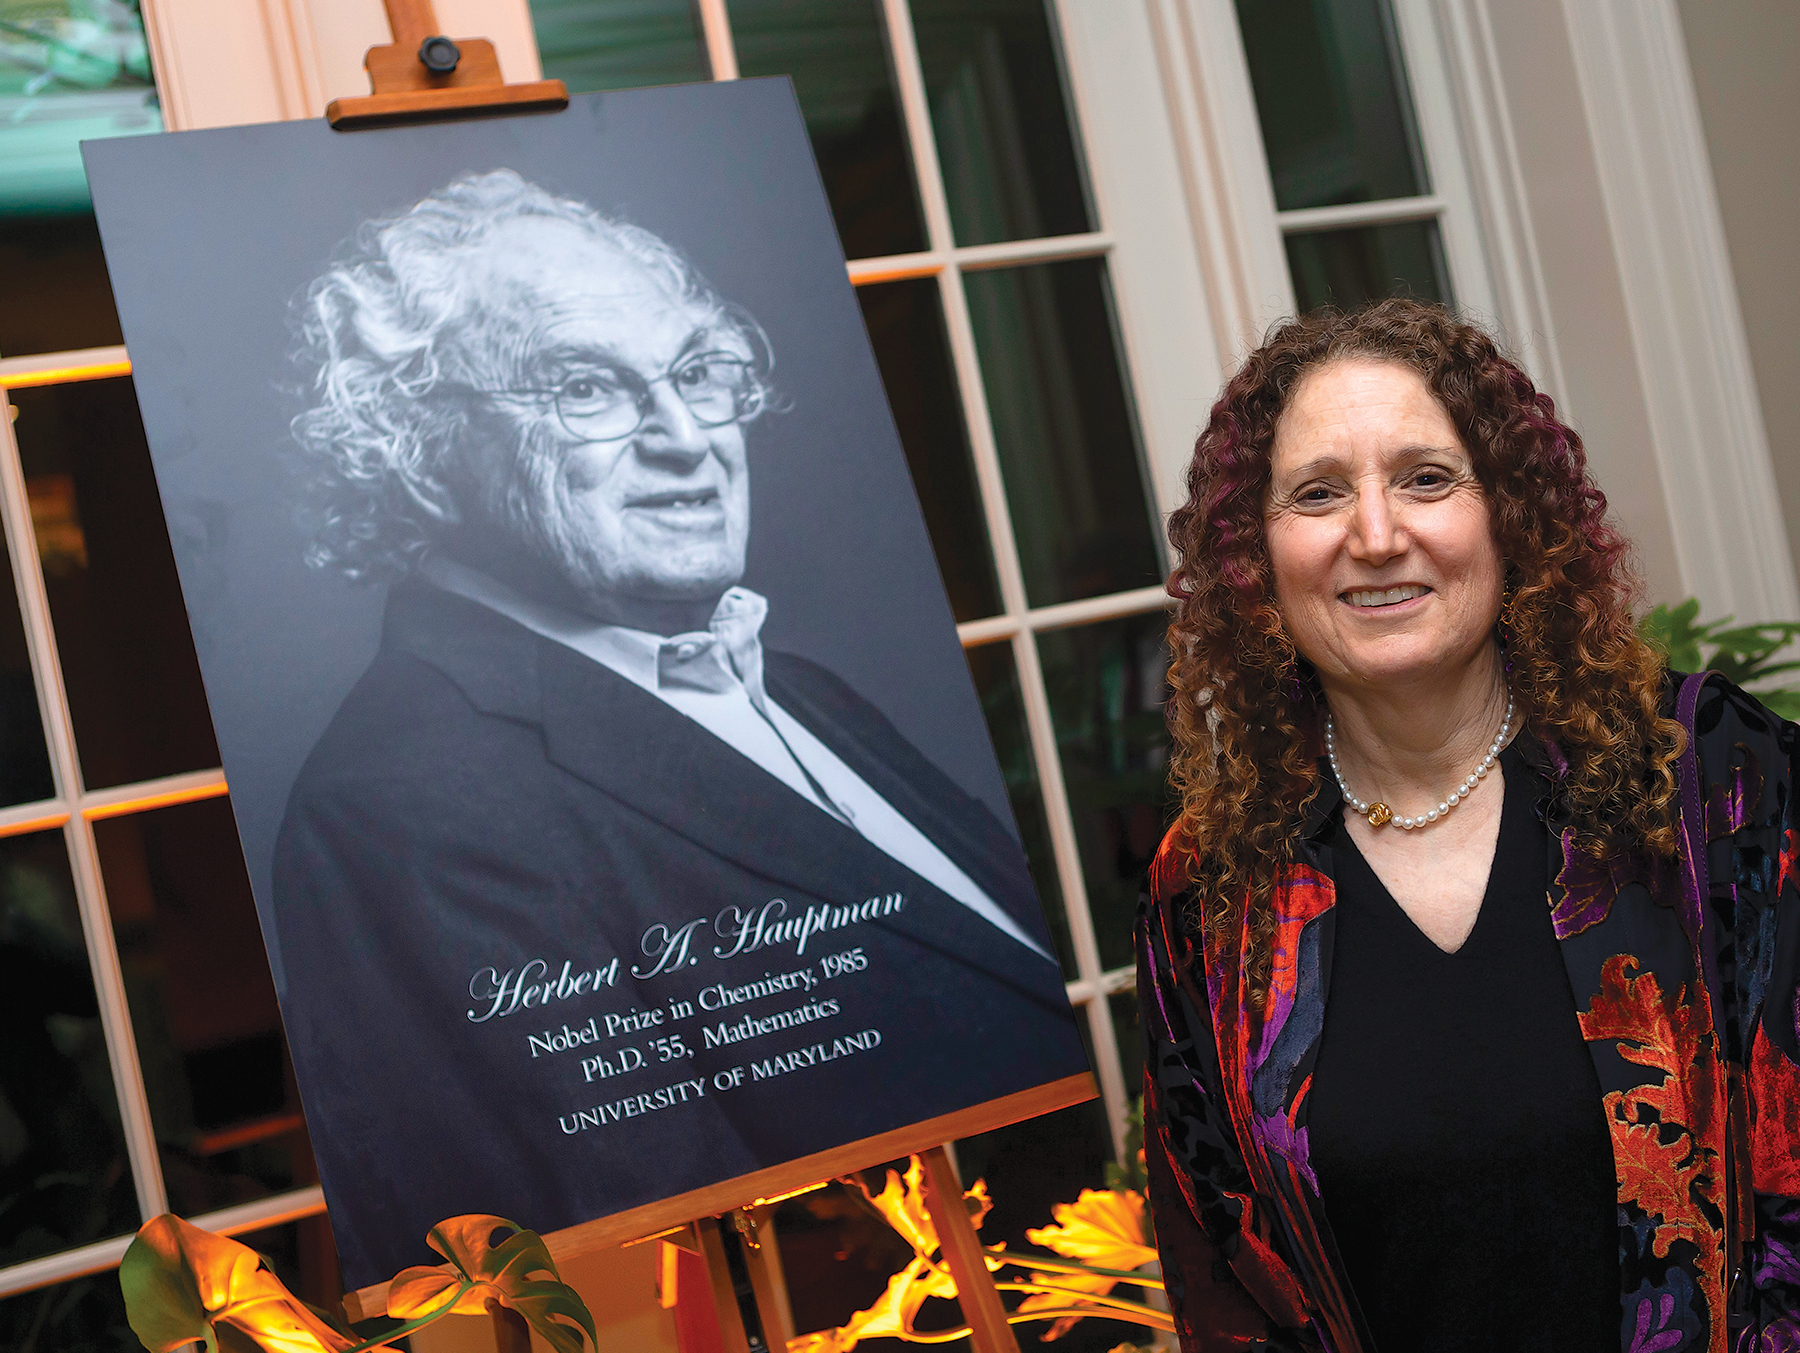 Carol Fullerton with a photo of her father, Nobel laureate Herbert Hauptman (Ph.D. ’55, mathematics).